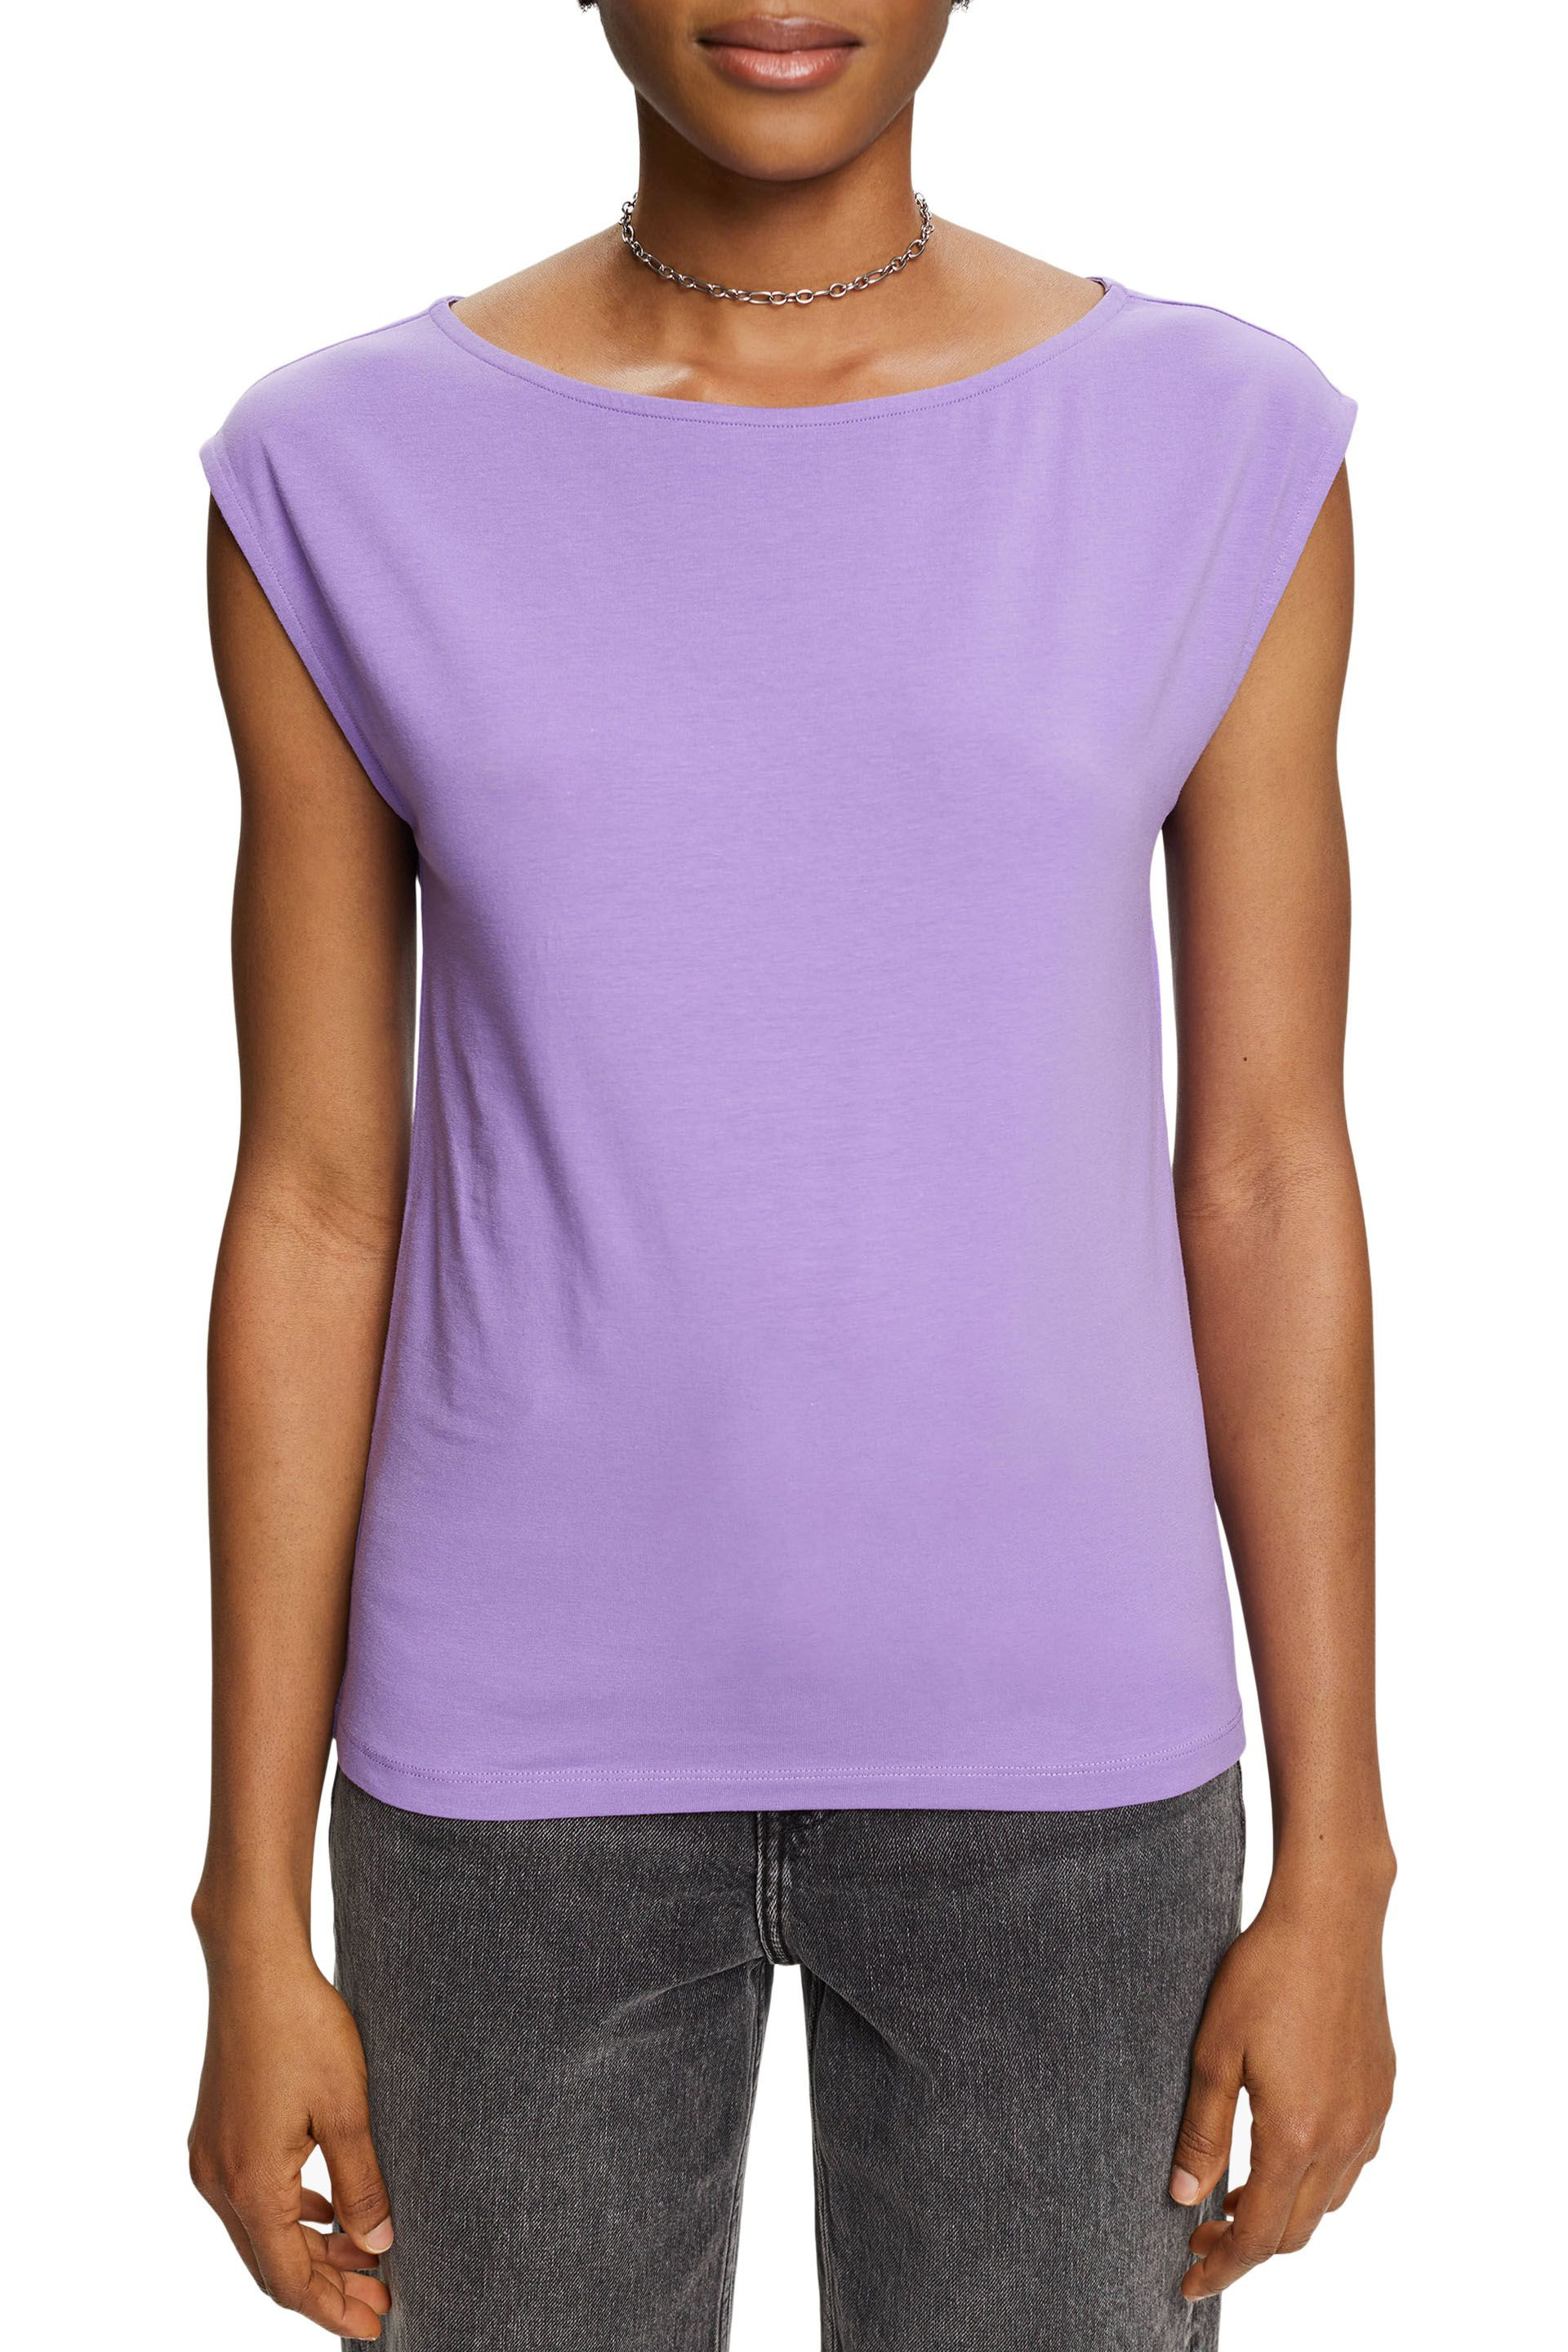 Esprit - T-shirt in cotone elasticizzato, Viola lilla, large image number 2